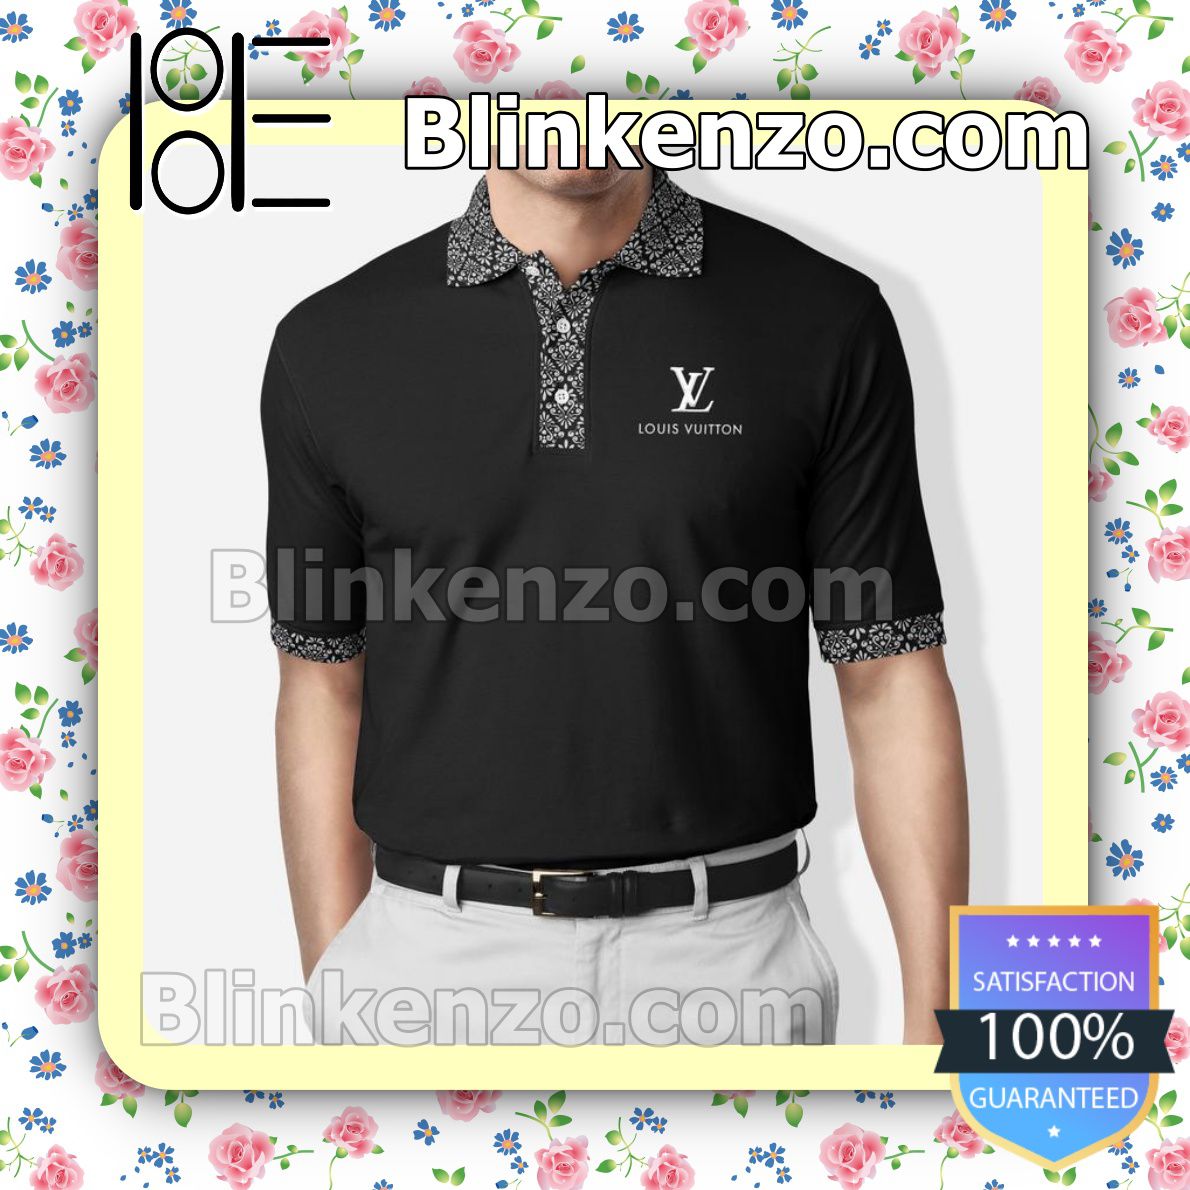 Louis Vuitton Black Luxury Brand Basic Embroidered Polo Shirts